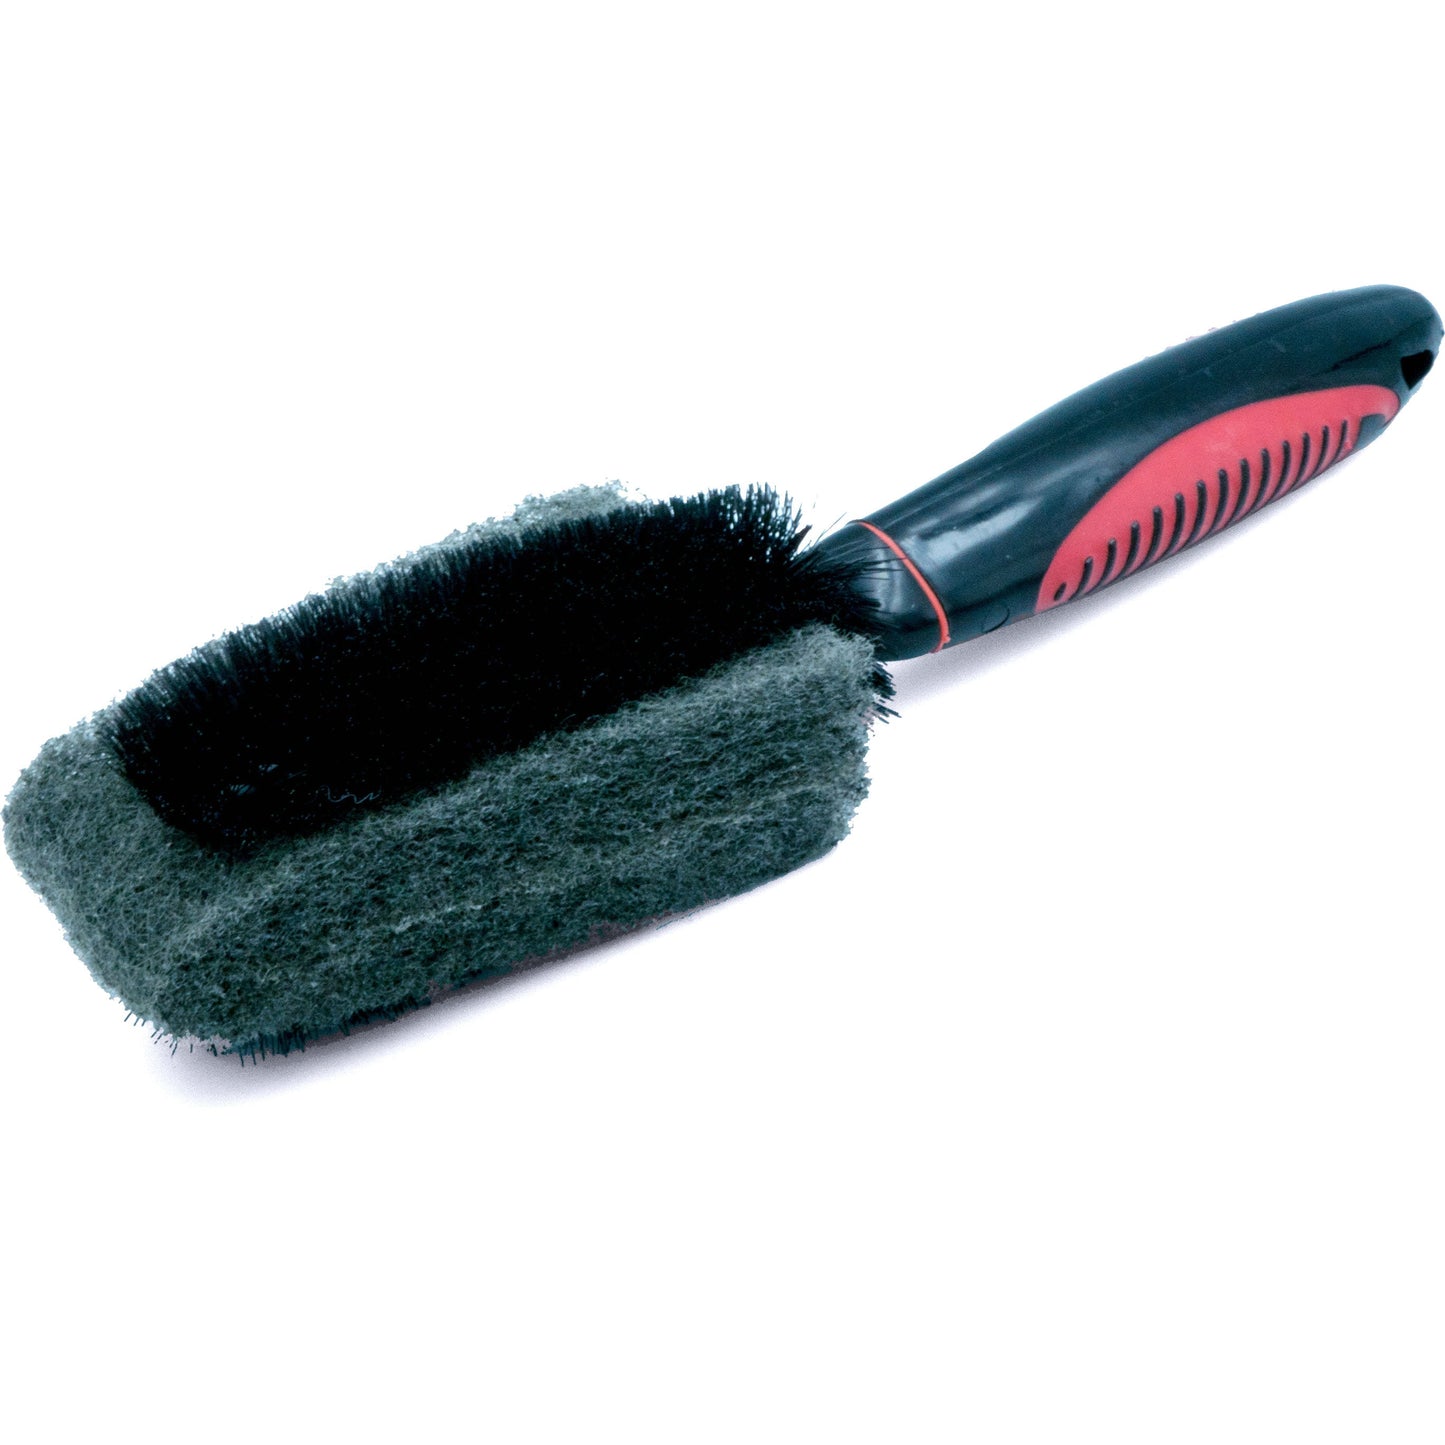 Cleanskin Sponge and Bristle Brush